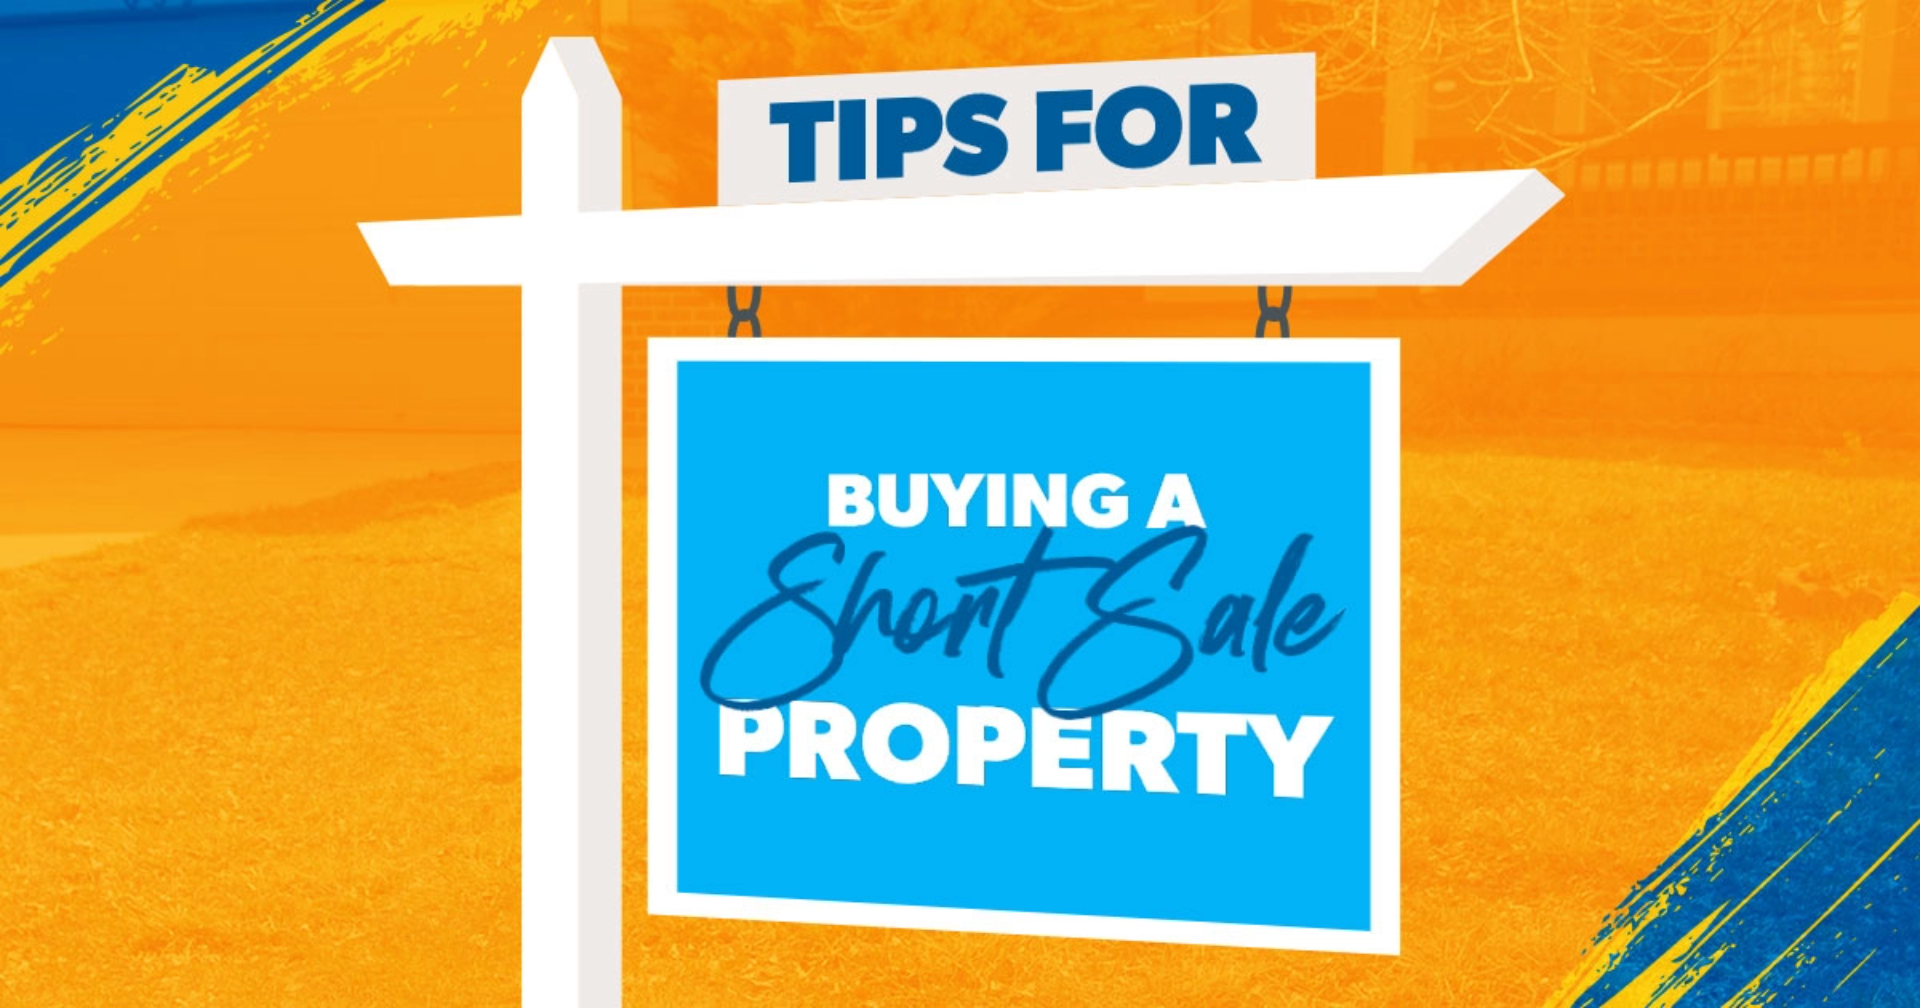 Tips for Buying a Short Sale Property blog header